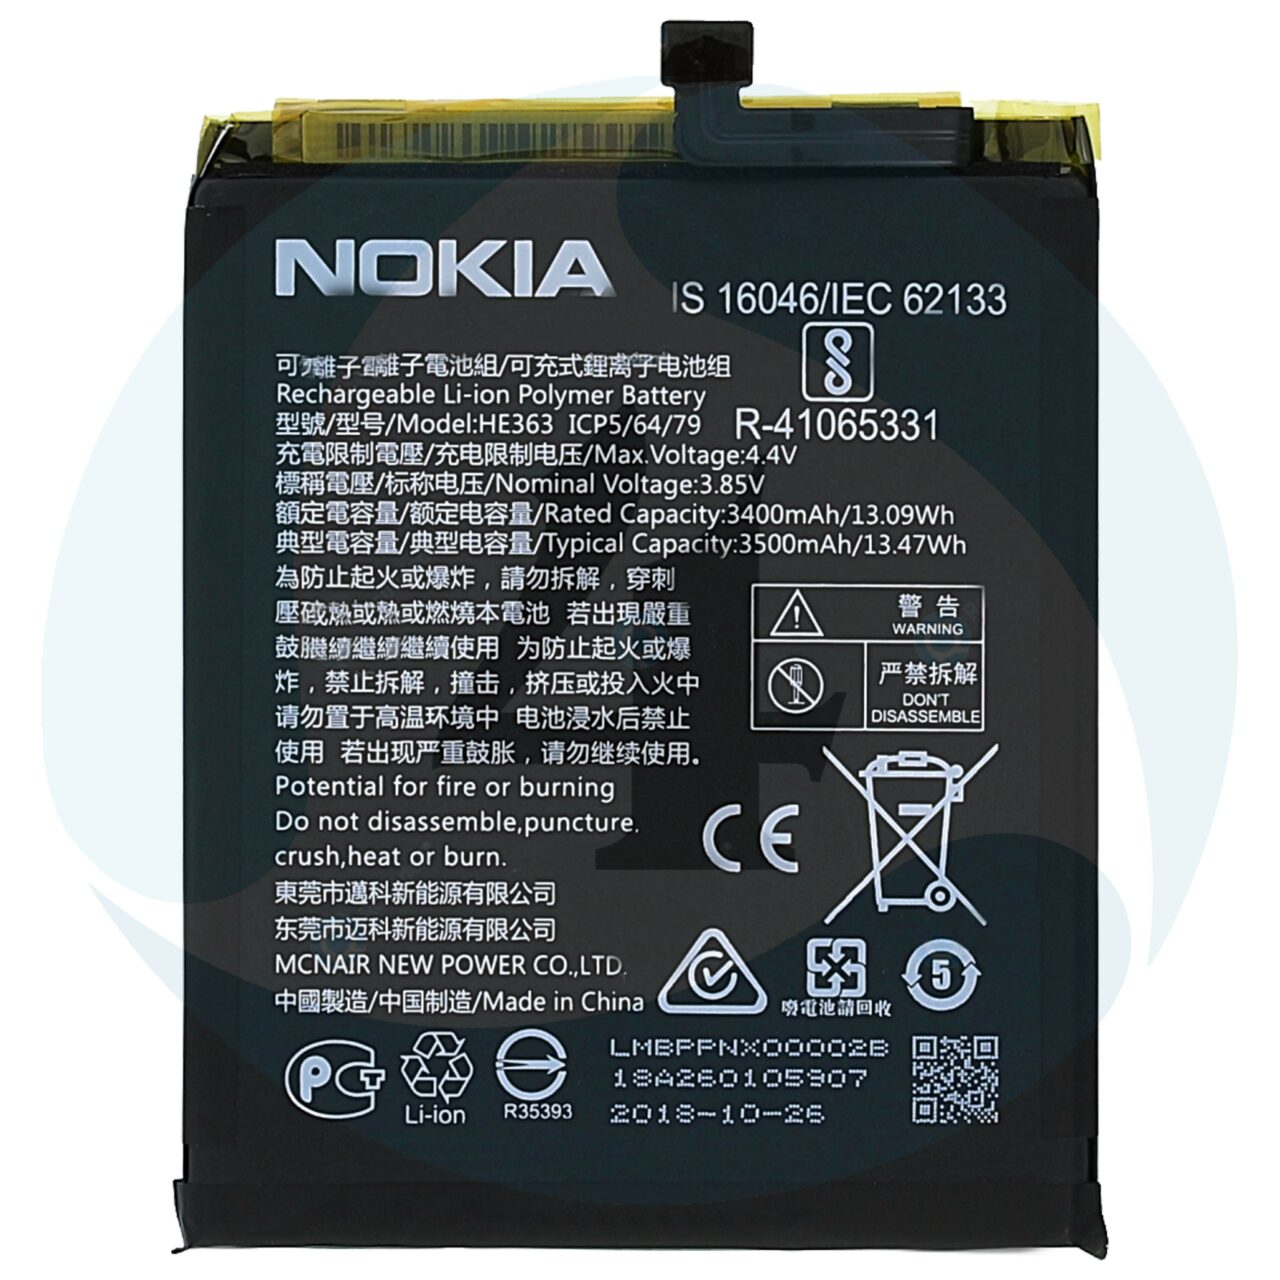 Nokia 7 1 plus battery he363 3500mah 8 1 3 1plus